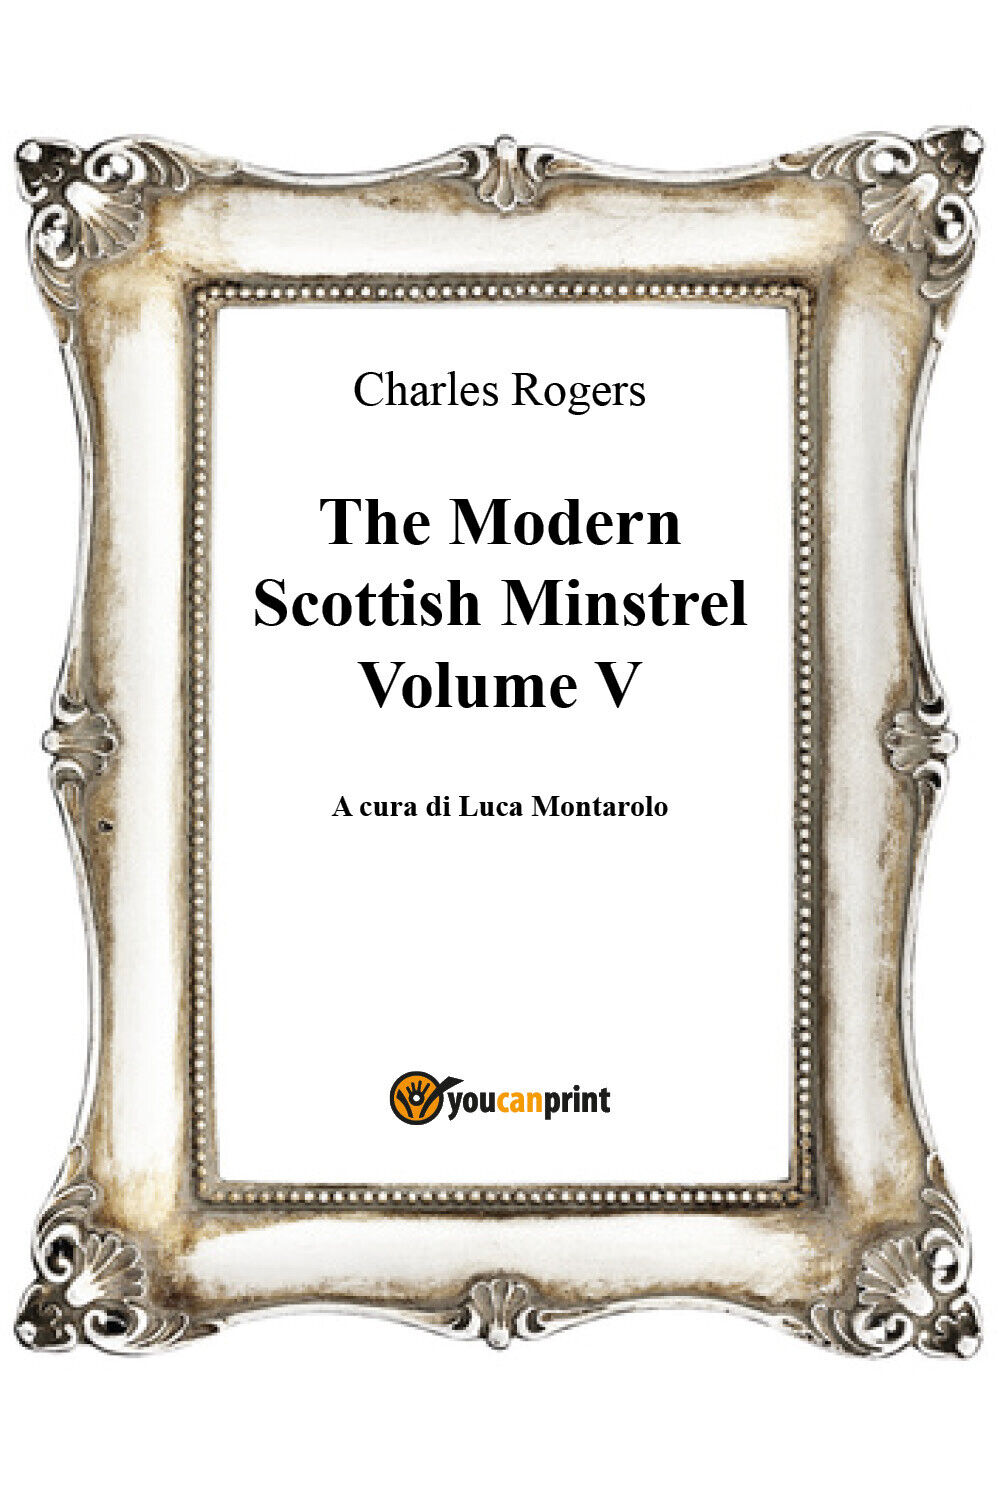 The Modern Scottish Minstrel , Volume V,  Charles Rogers, L. Montarolo,  2018